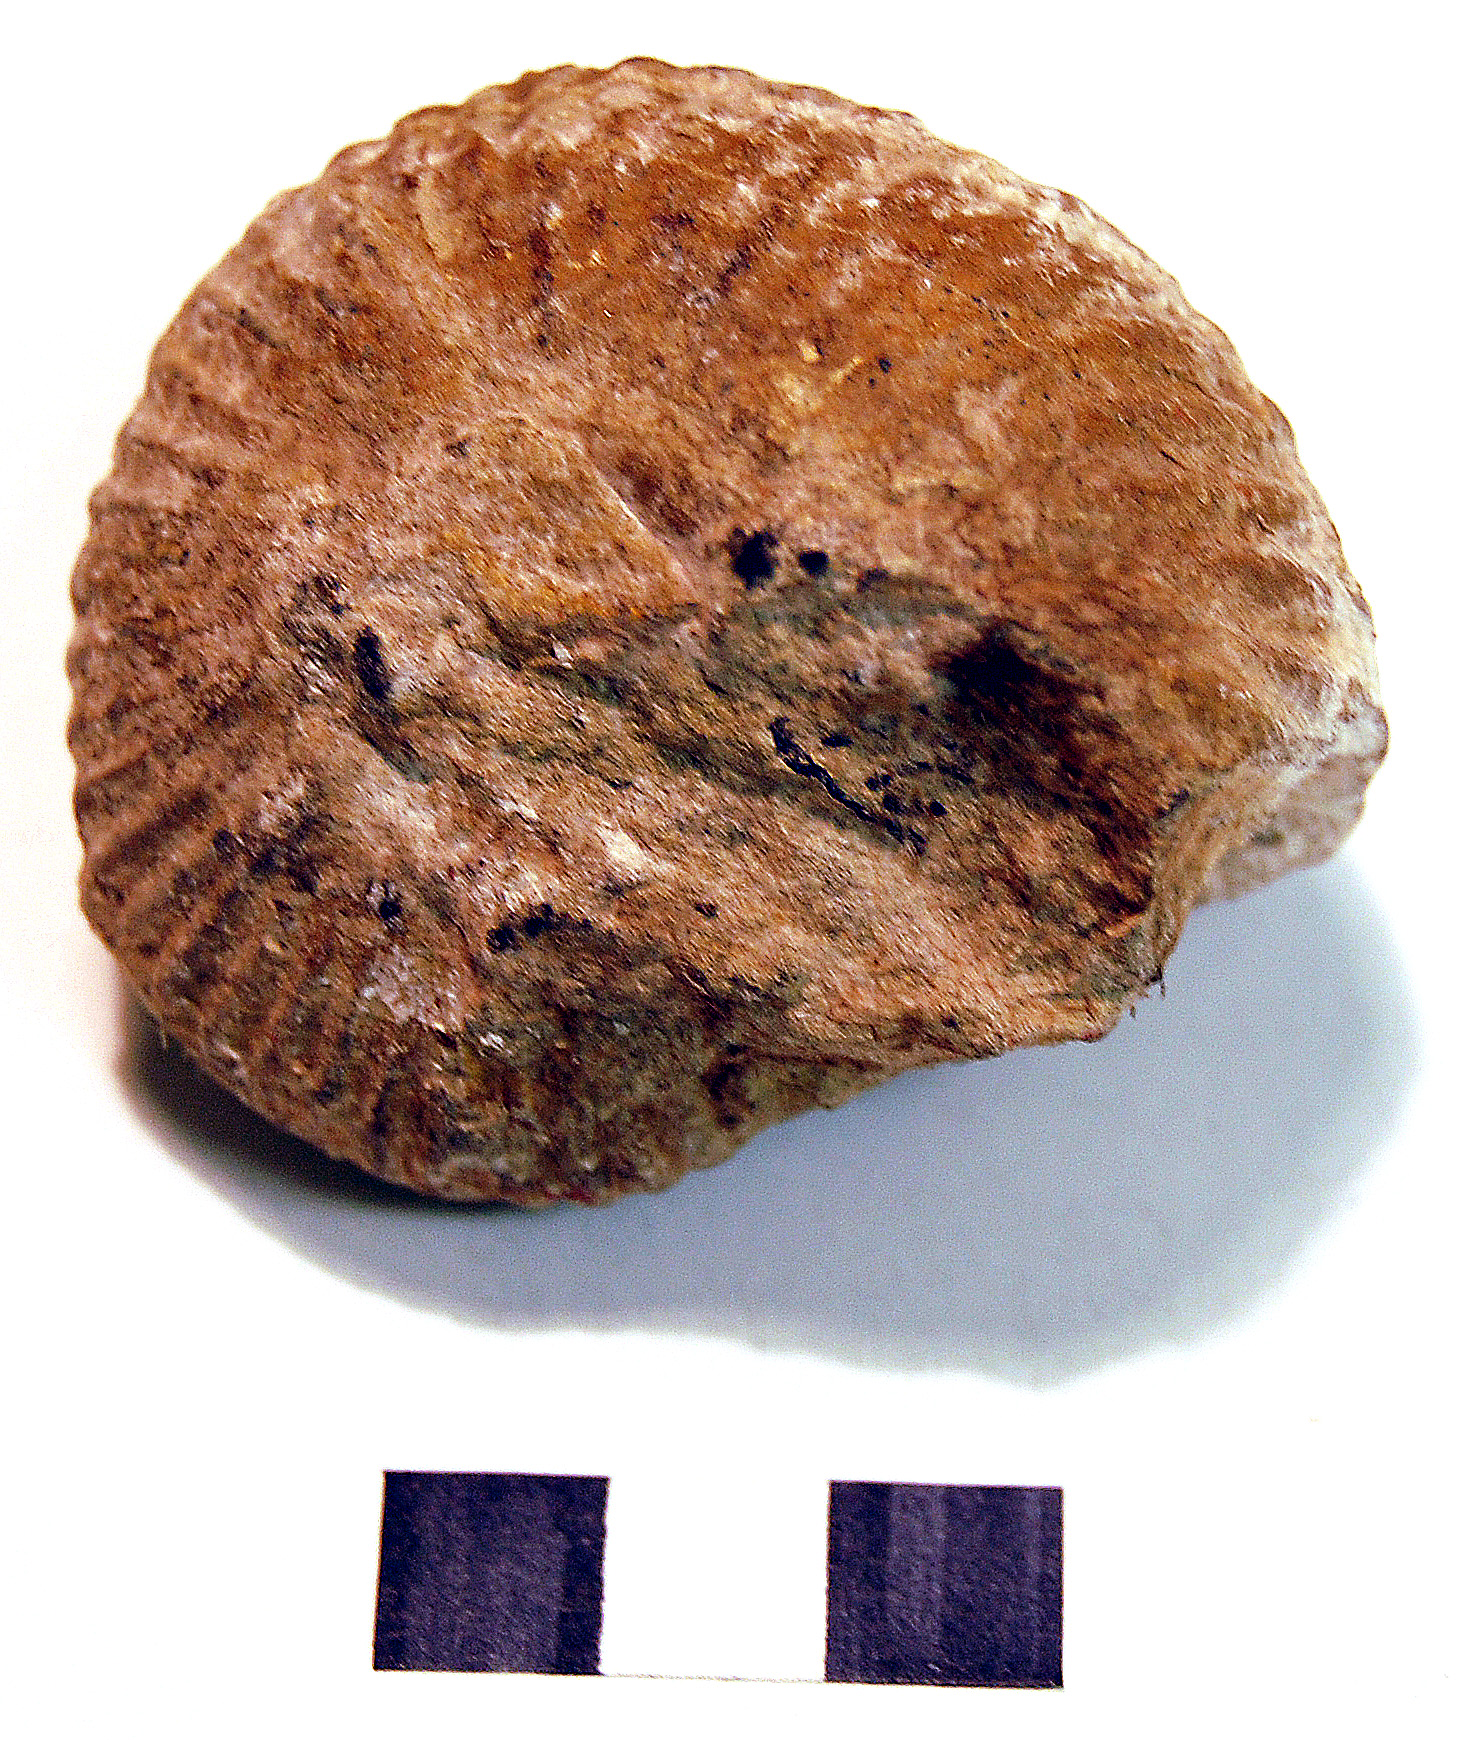 Photograph of ammounite: Cadoceras sp.